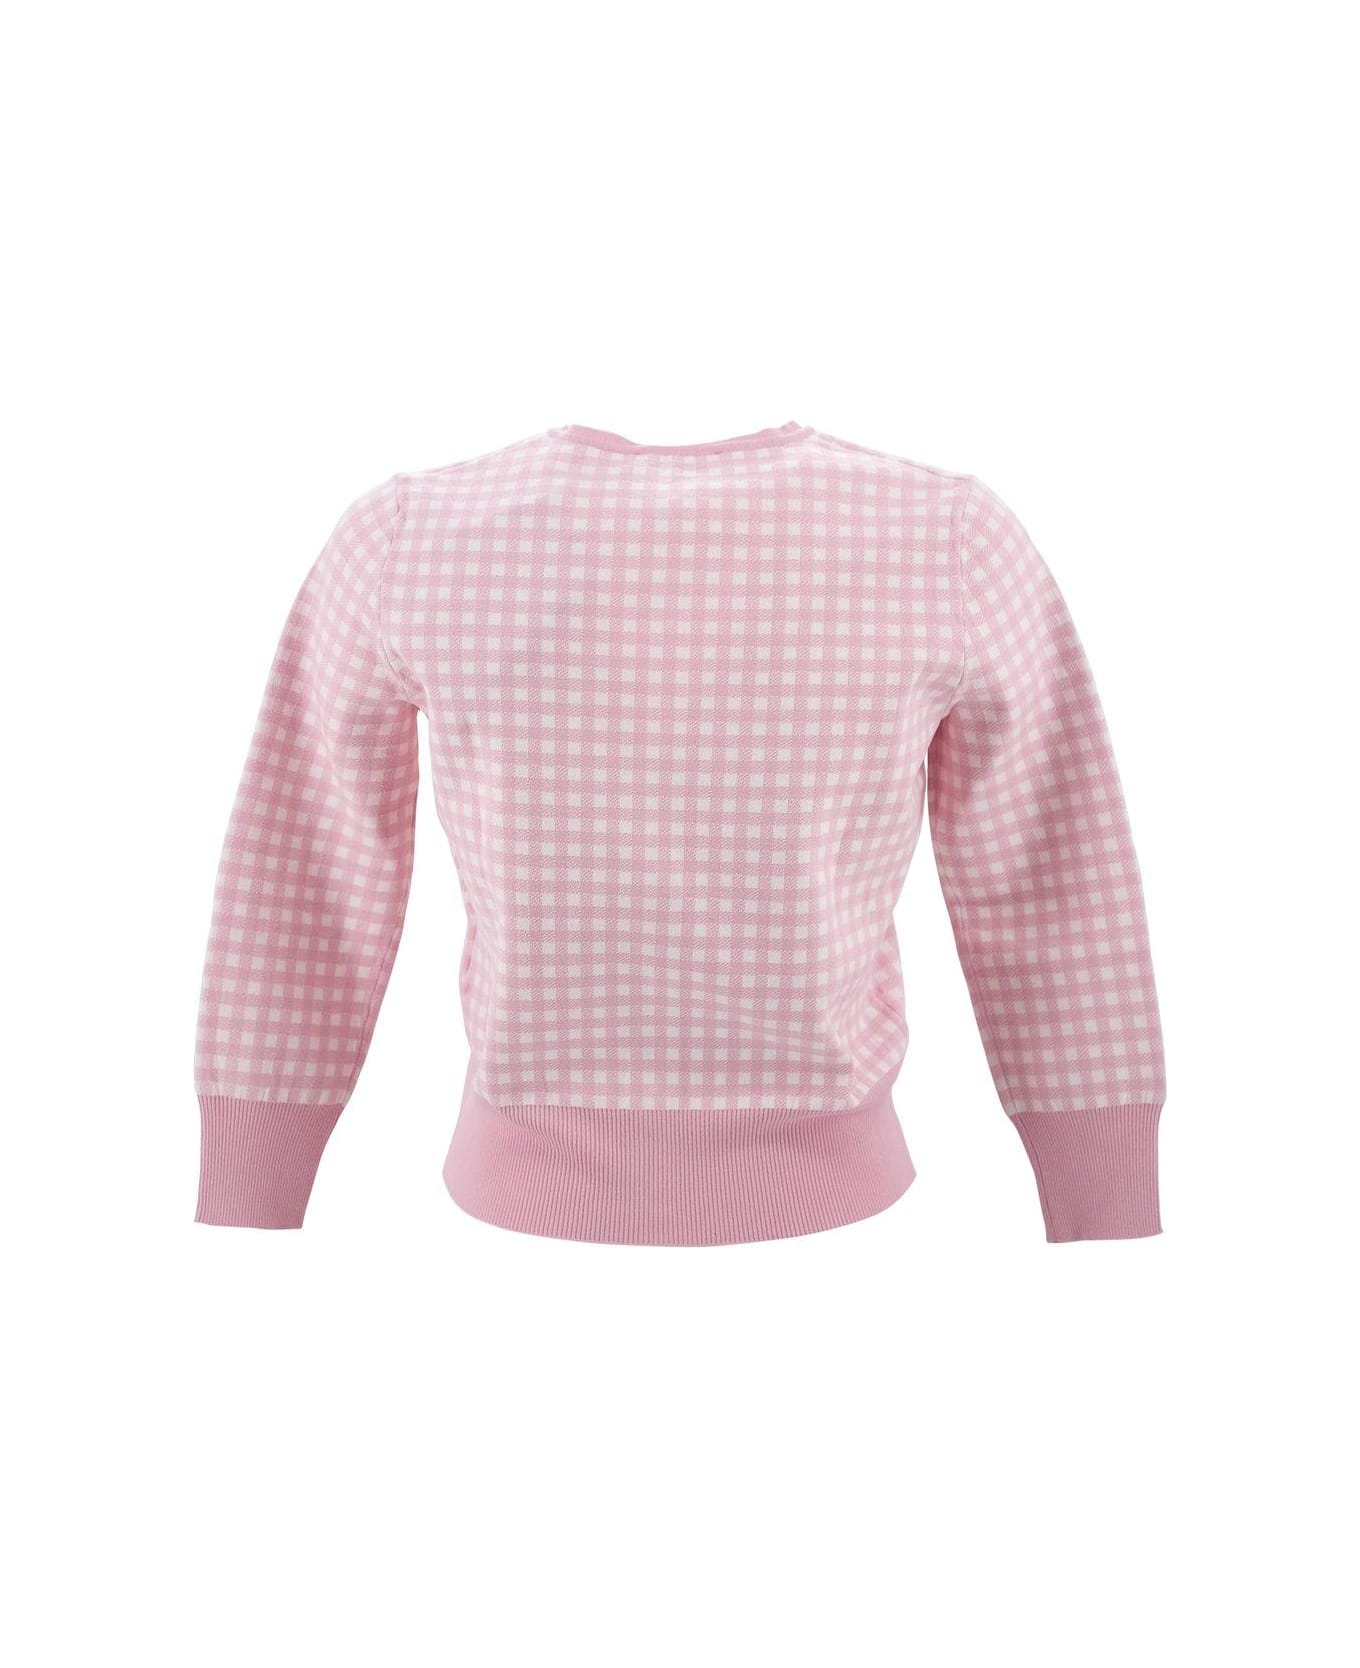 Max Mara Studio Checked Long-sleeved Top - White/pink